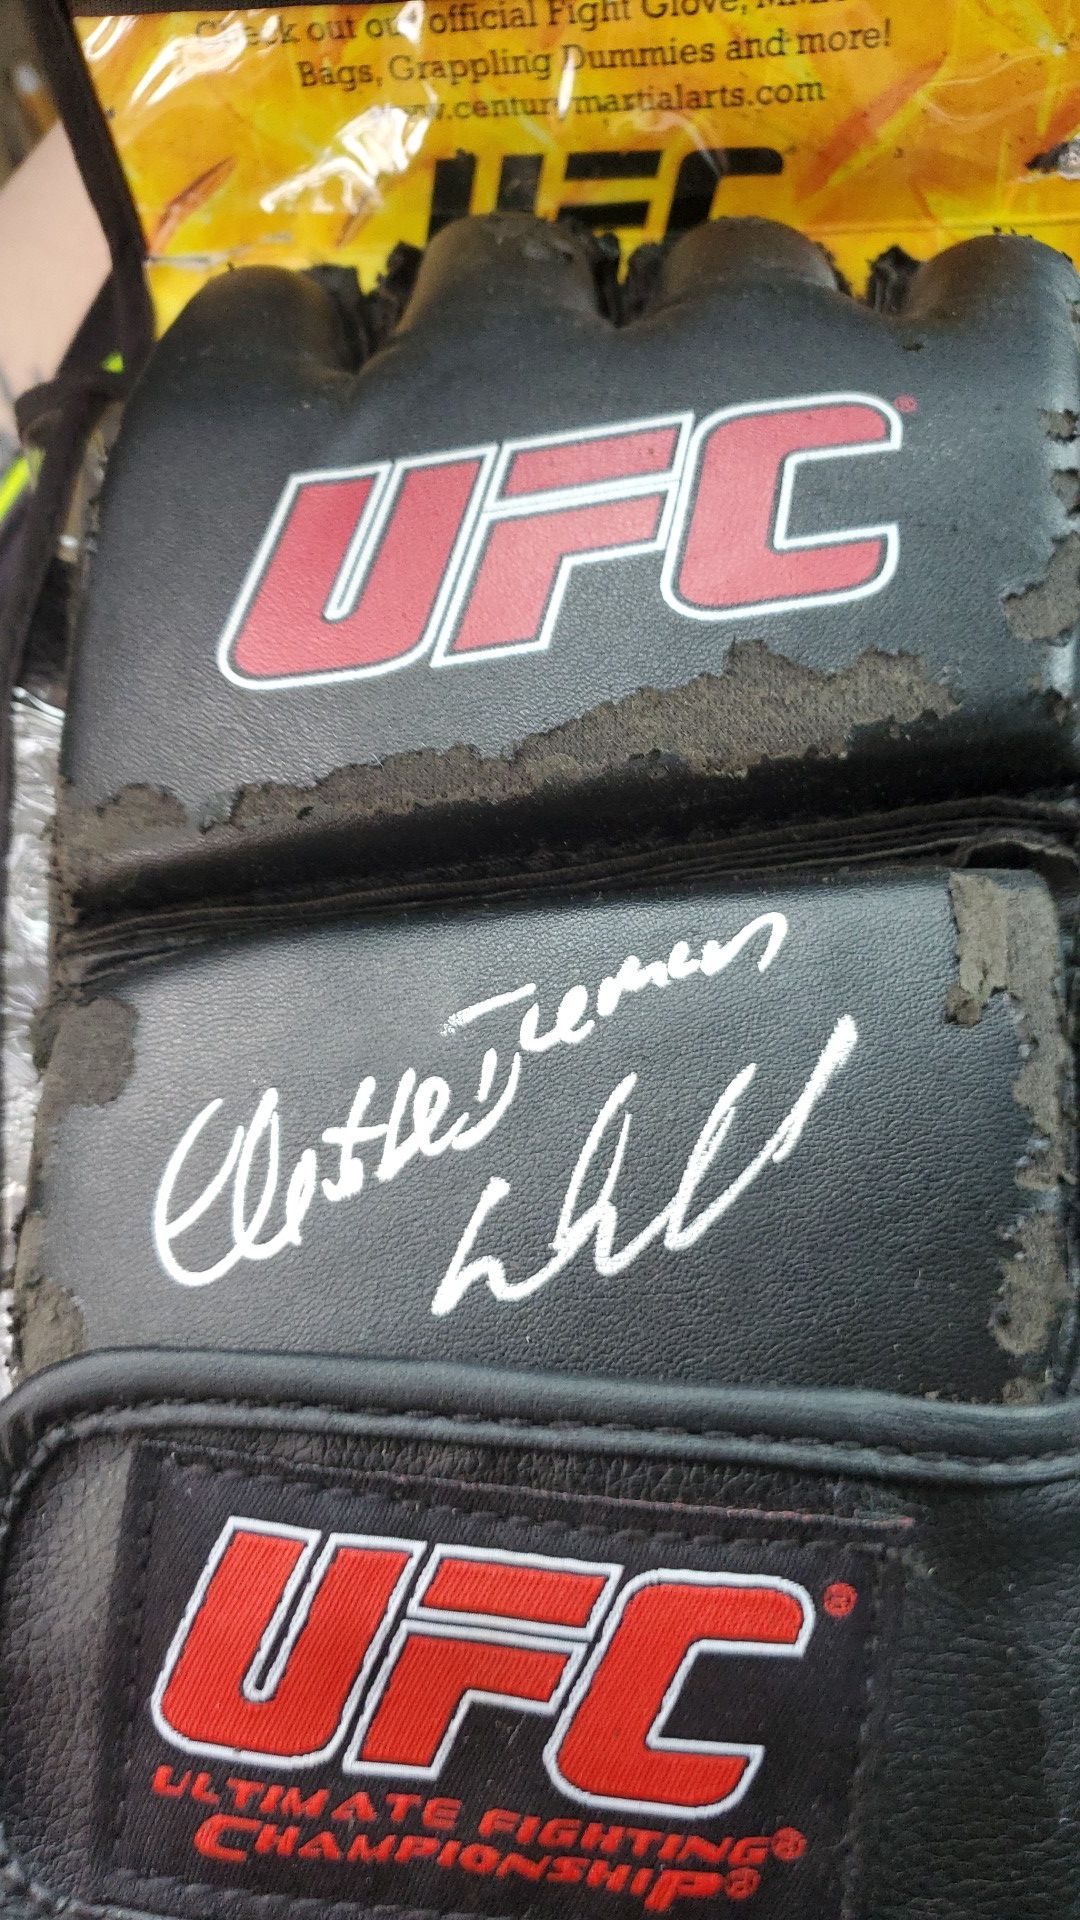 Chuck Liddell autographed glove